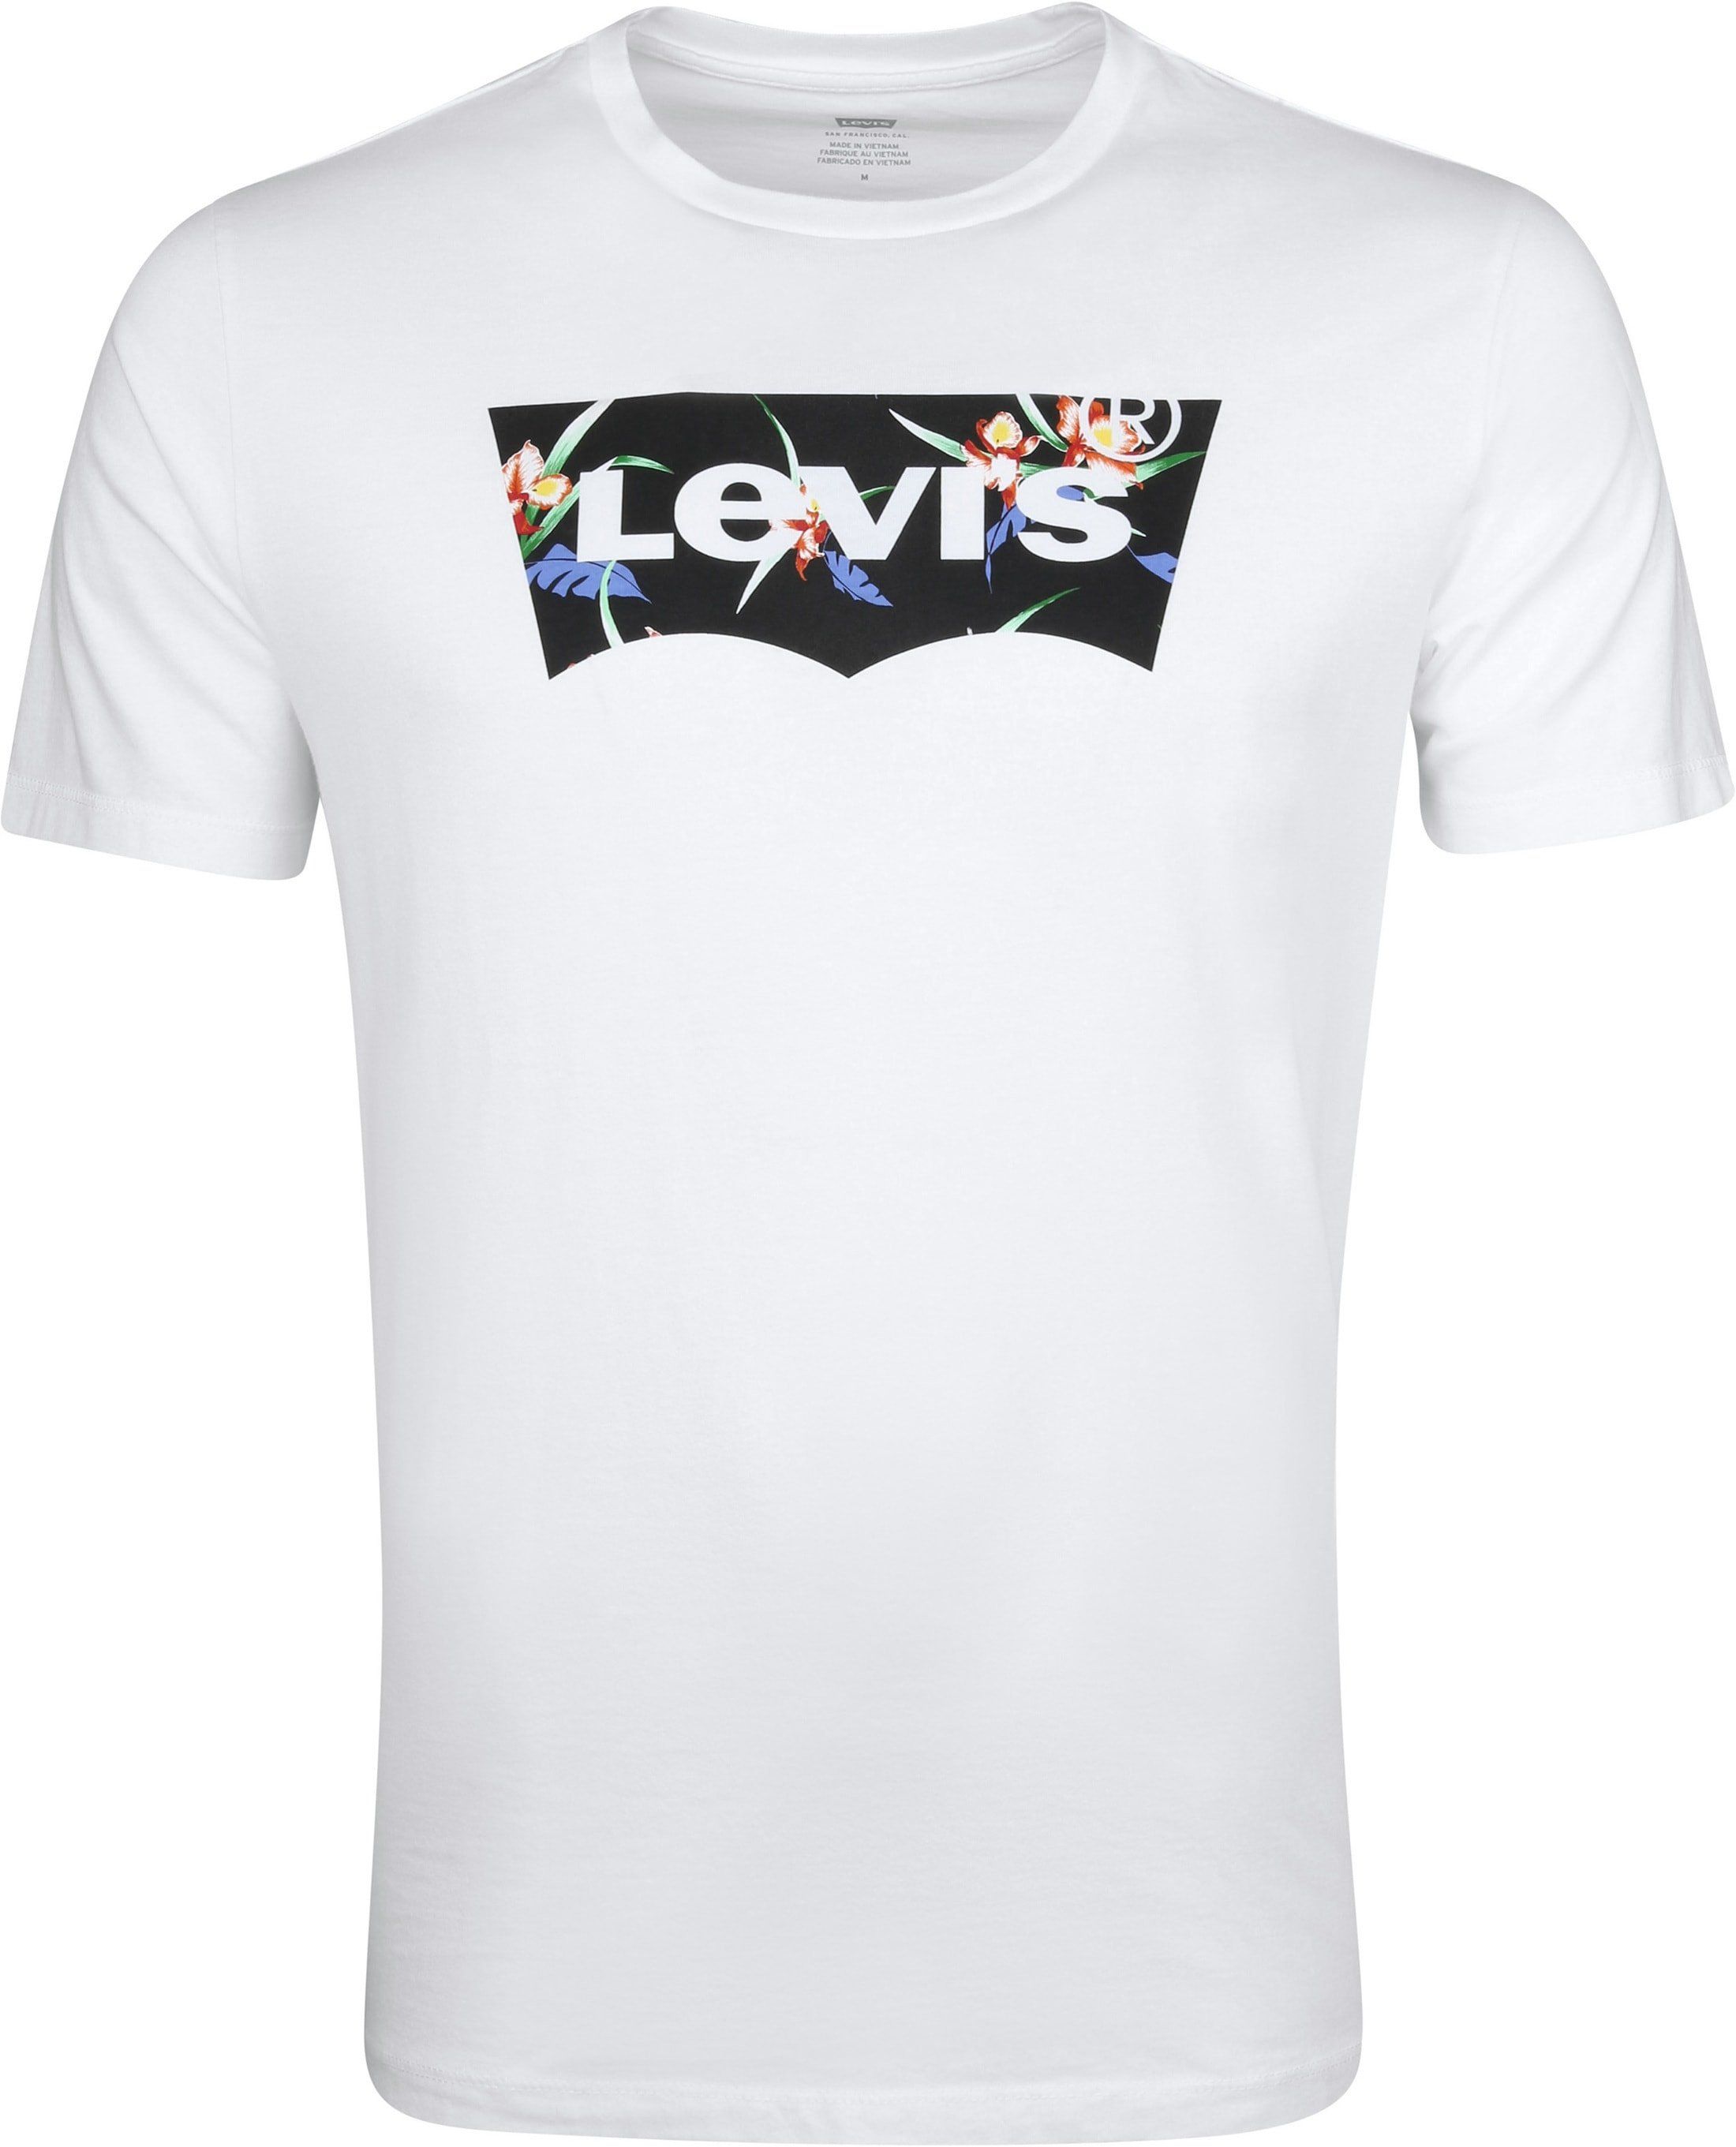 Levi's T-shirt Flower Logo White size XS